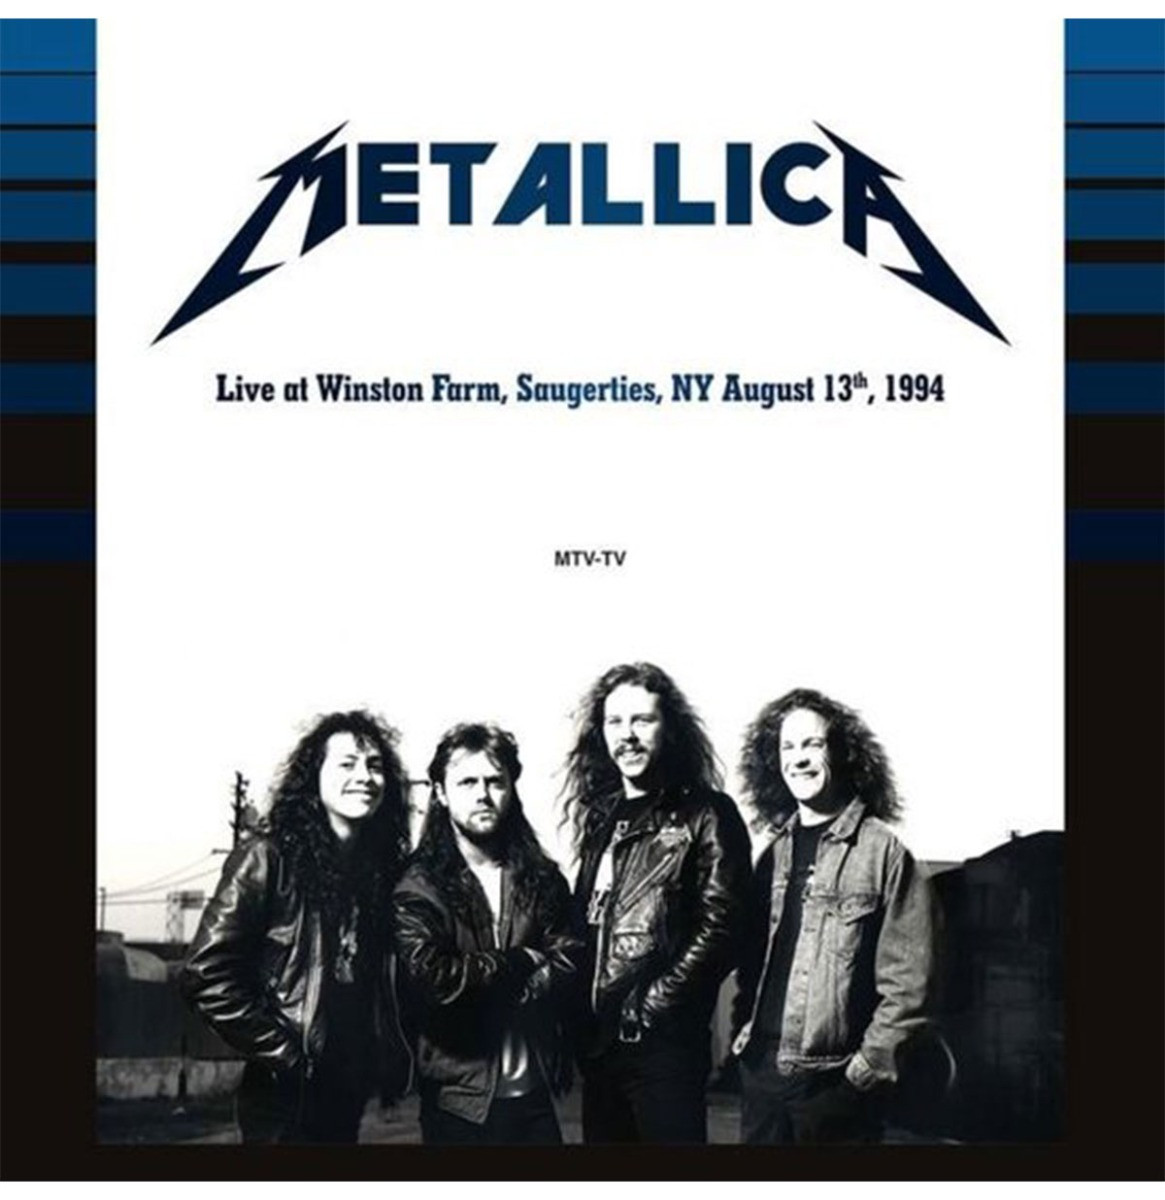 Metallica - Live at Winston Farm, Saugerties, NY August 13th, 1994 (Gekleurd Vinyl) 2LP